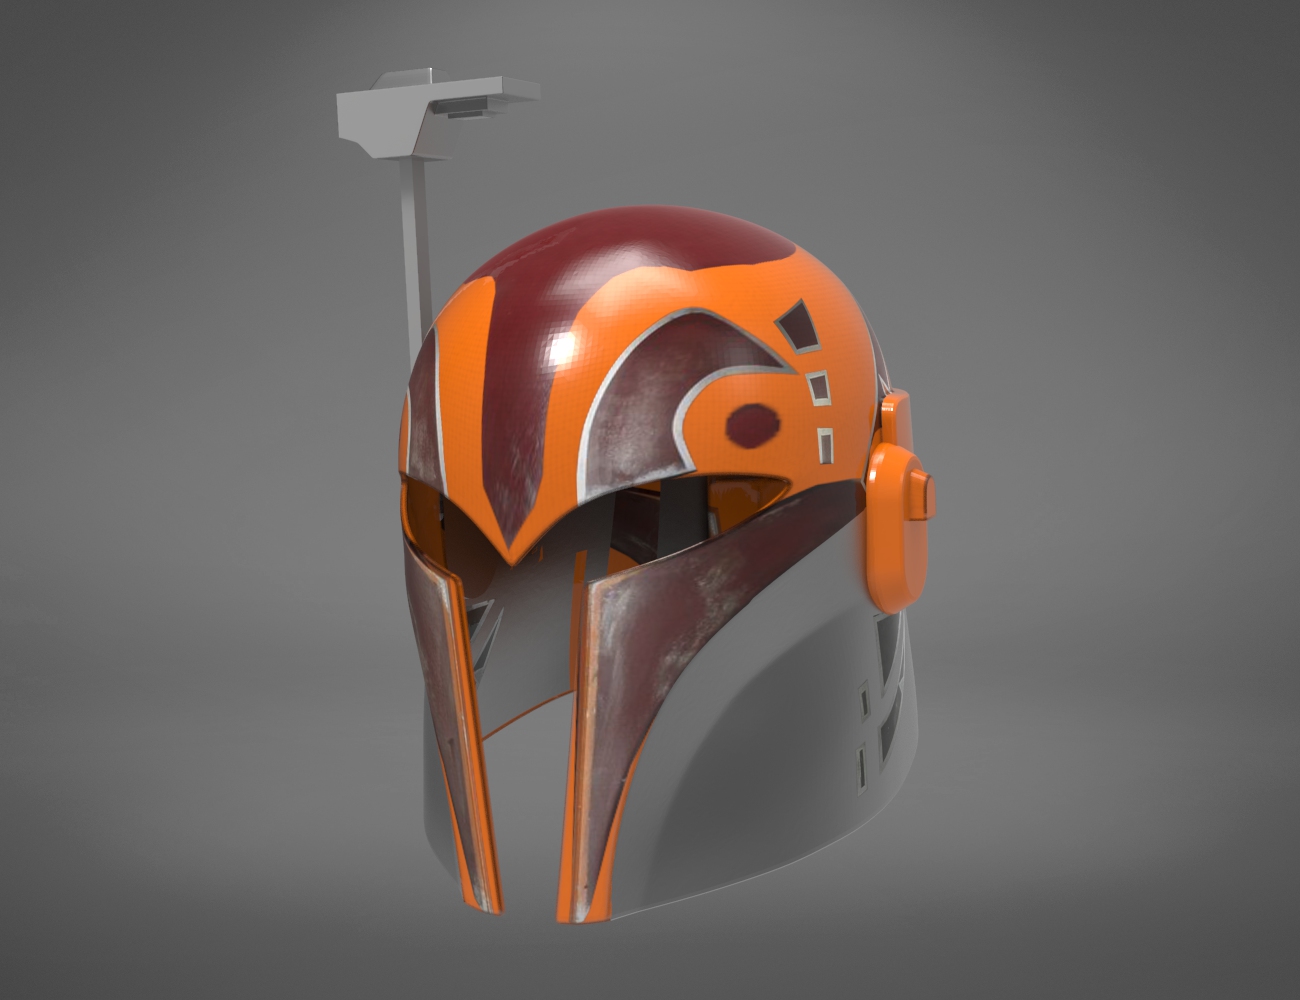 3D printable helmet inspired by the Guavian Enforcer